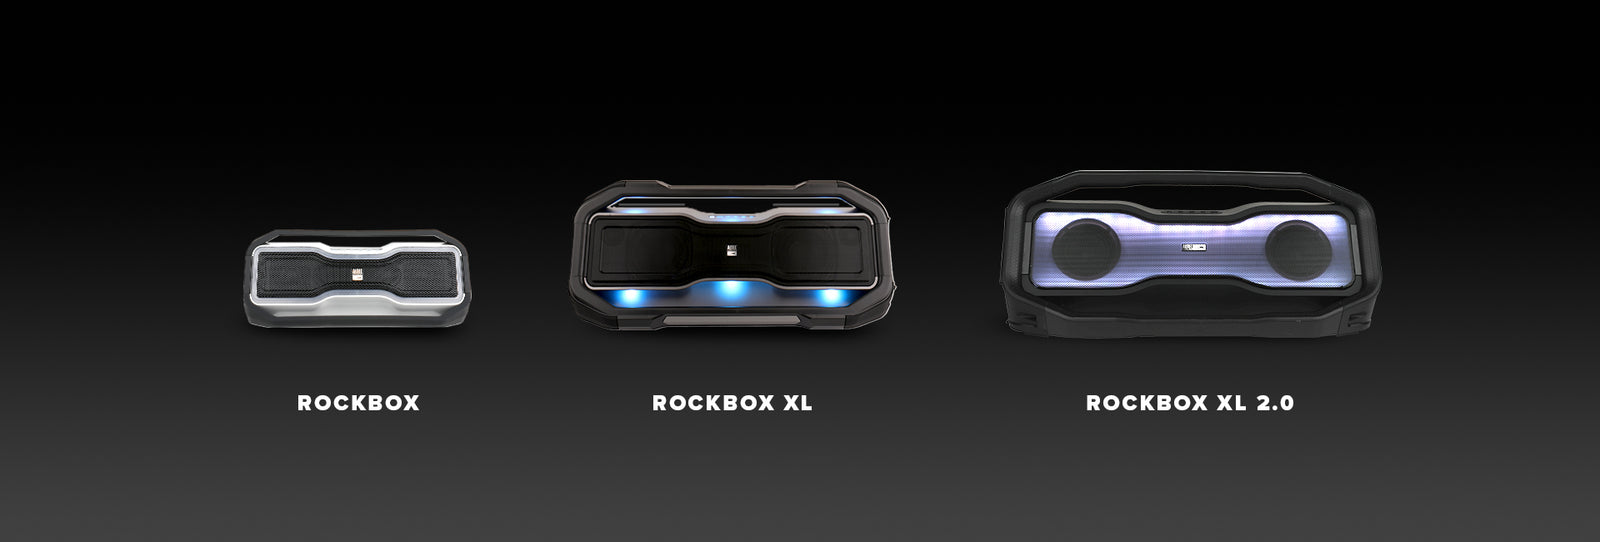 Rockbox_Speakers_Collection_Header